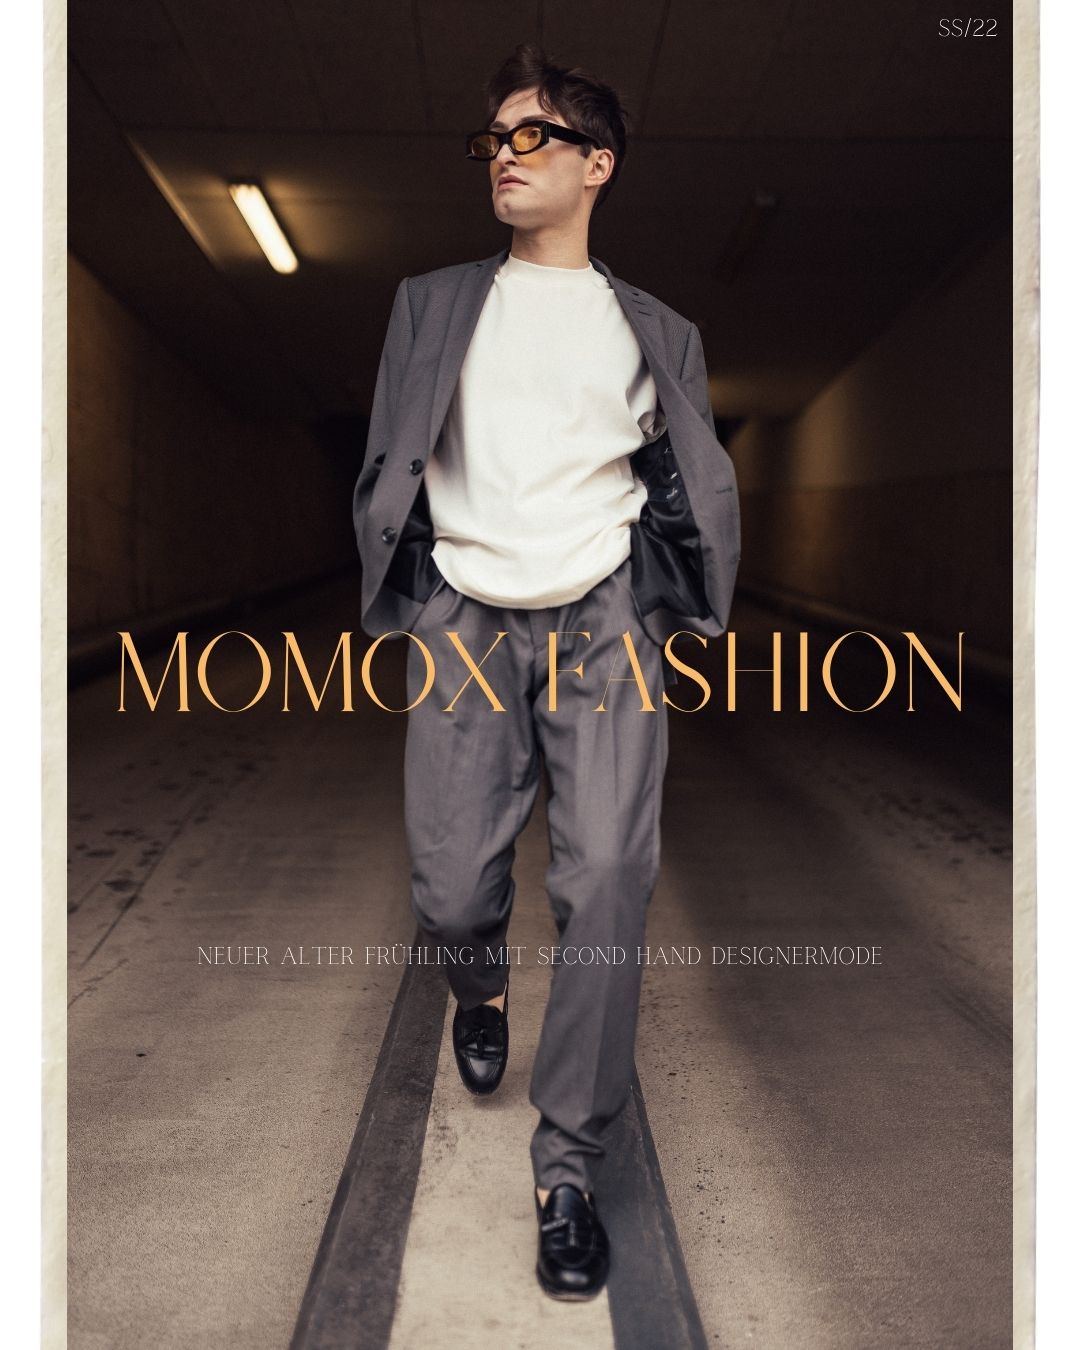 Momox Fashion: Second Hand Designermode.